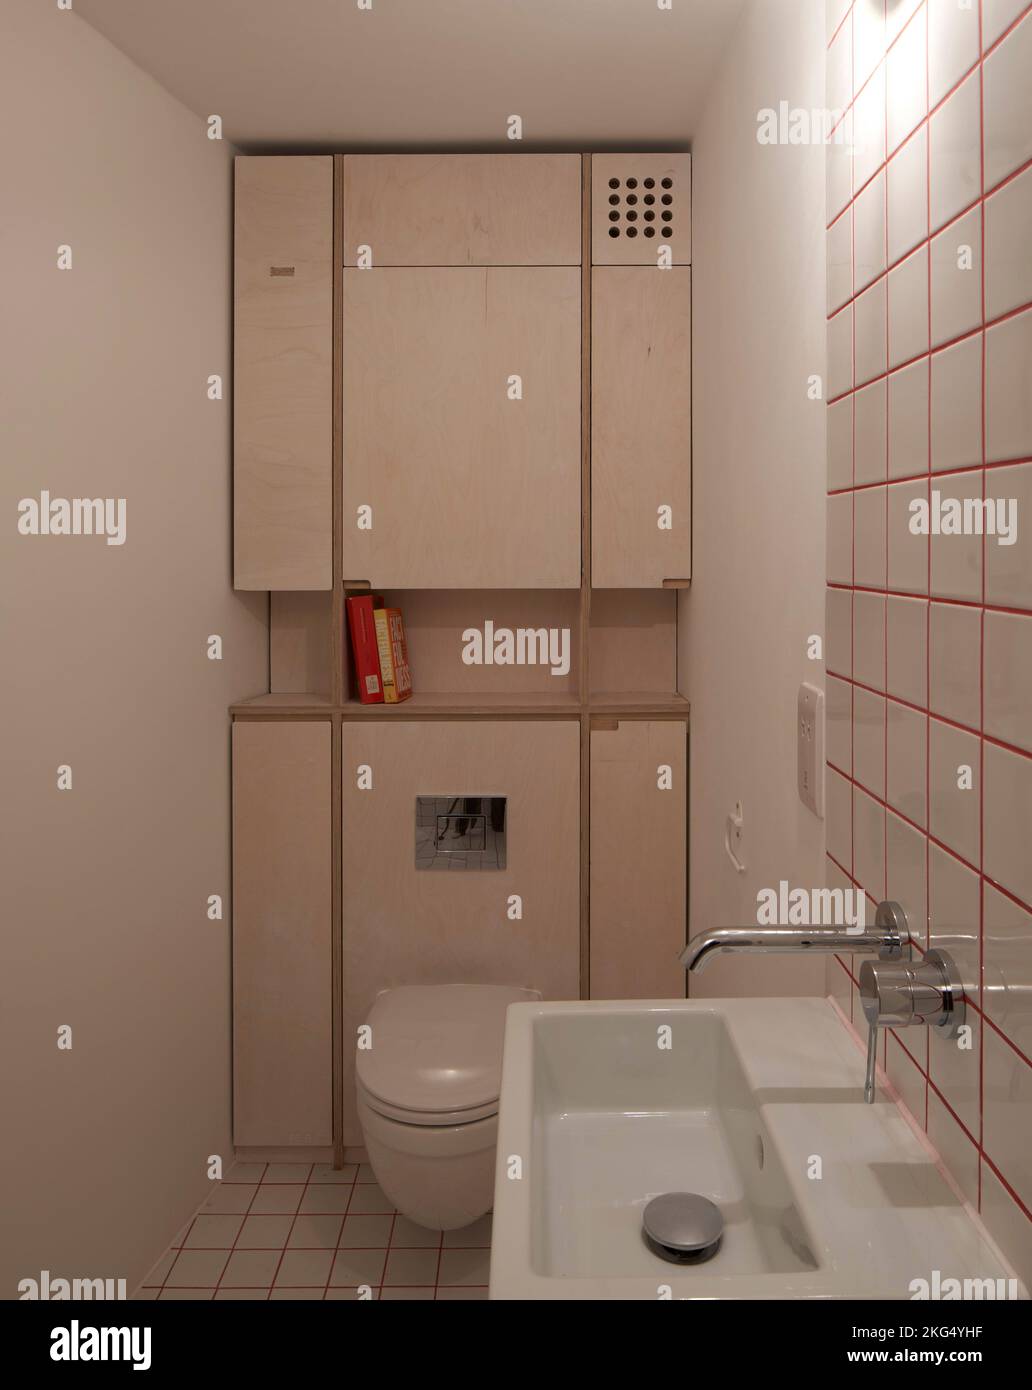 Bathroom. THE QUEEN OF CATFORD, London, United Kingdom. Architect: Tsuruta Architects, 2021. Stock Photo